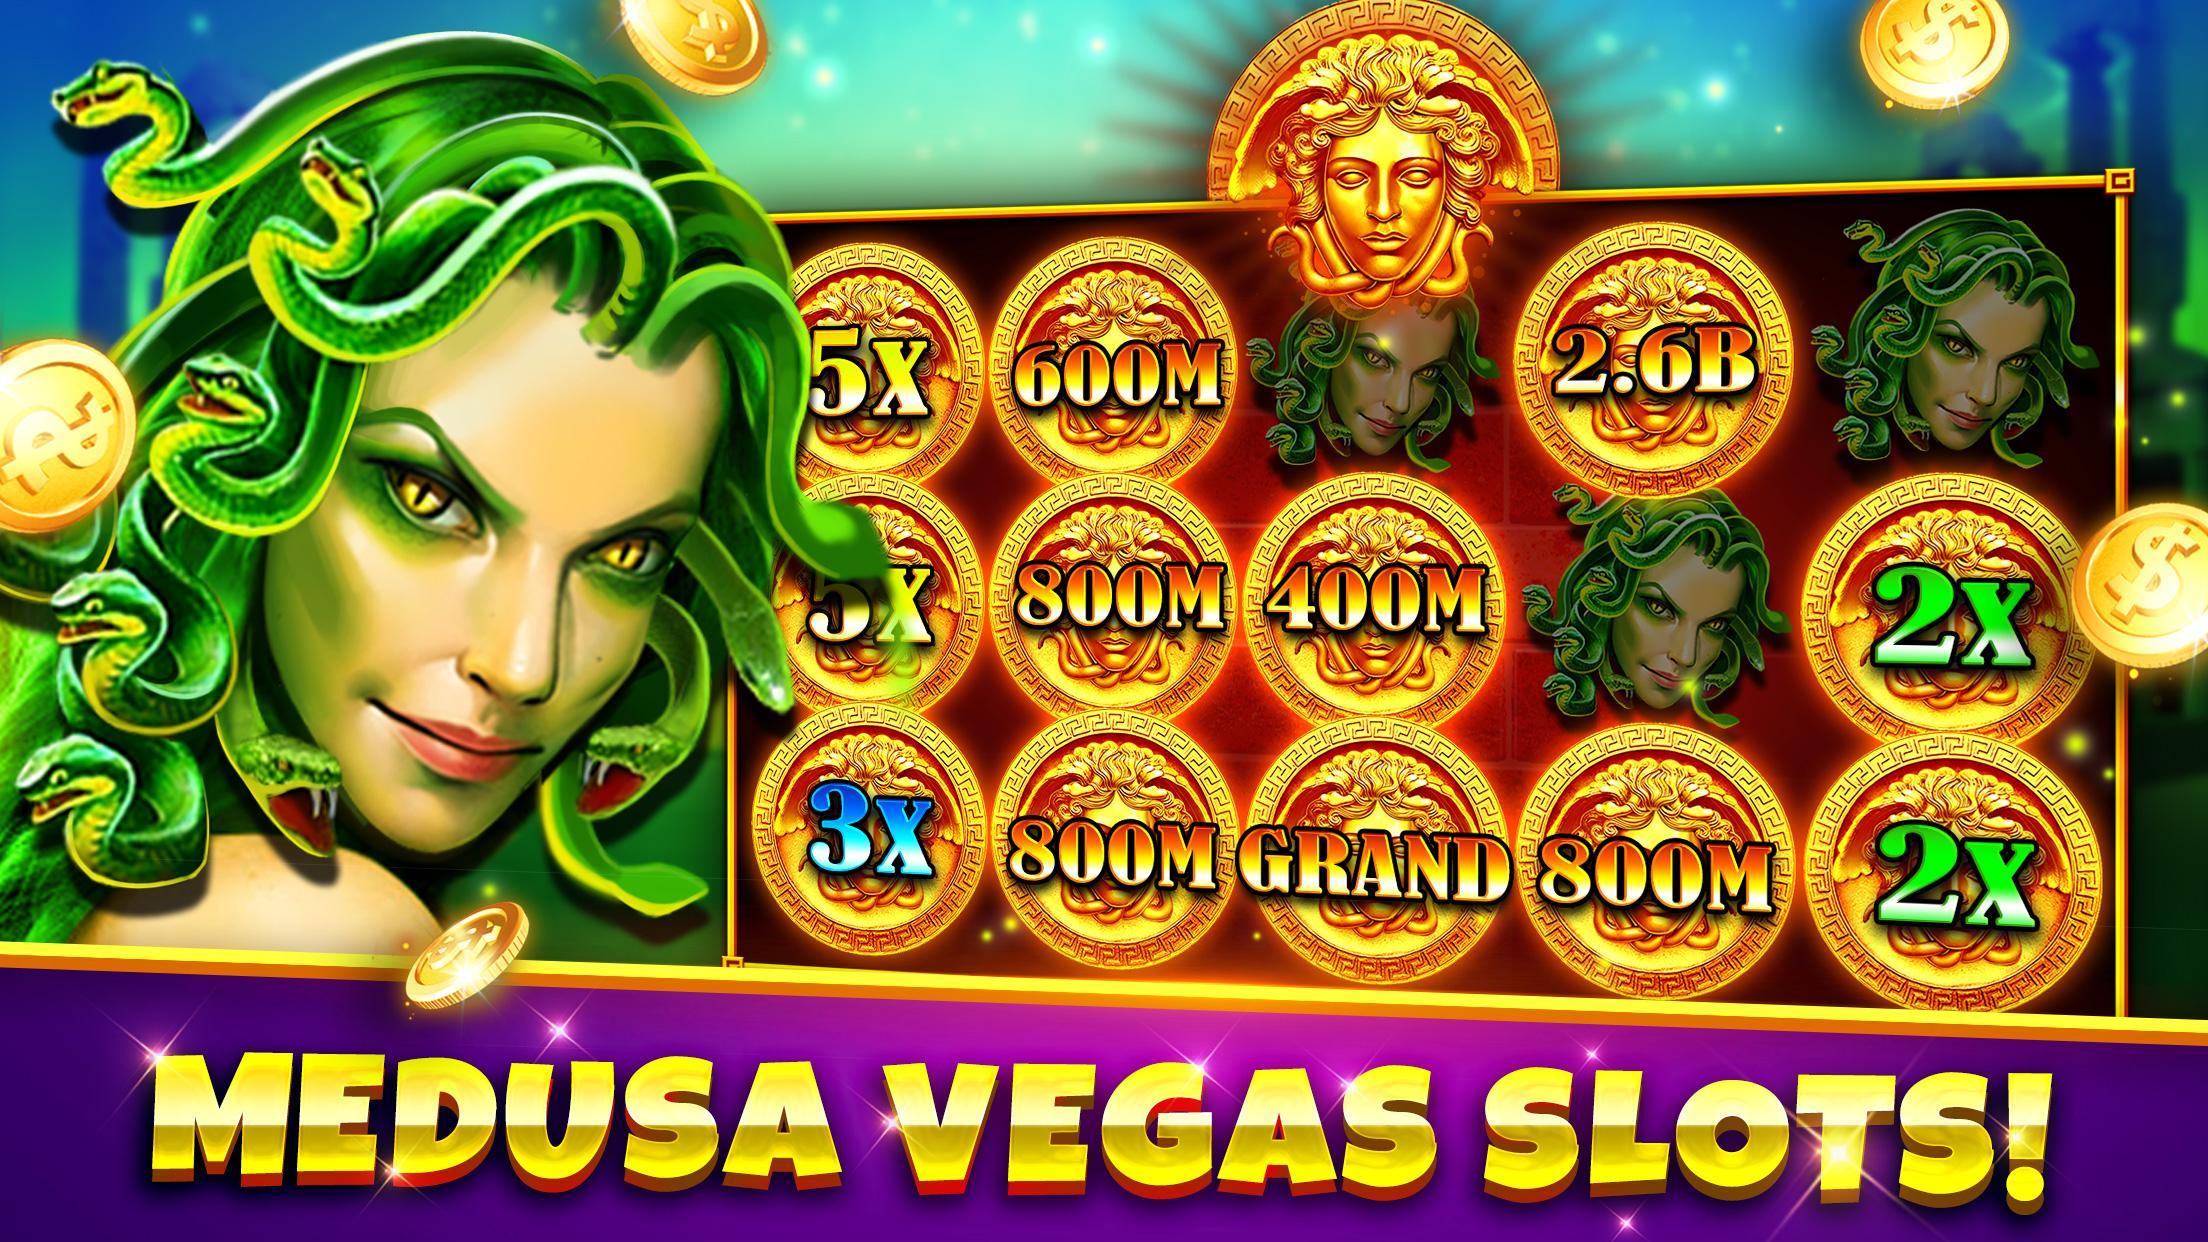 Casino games online slot machines казино вулкан о